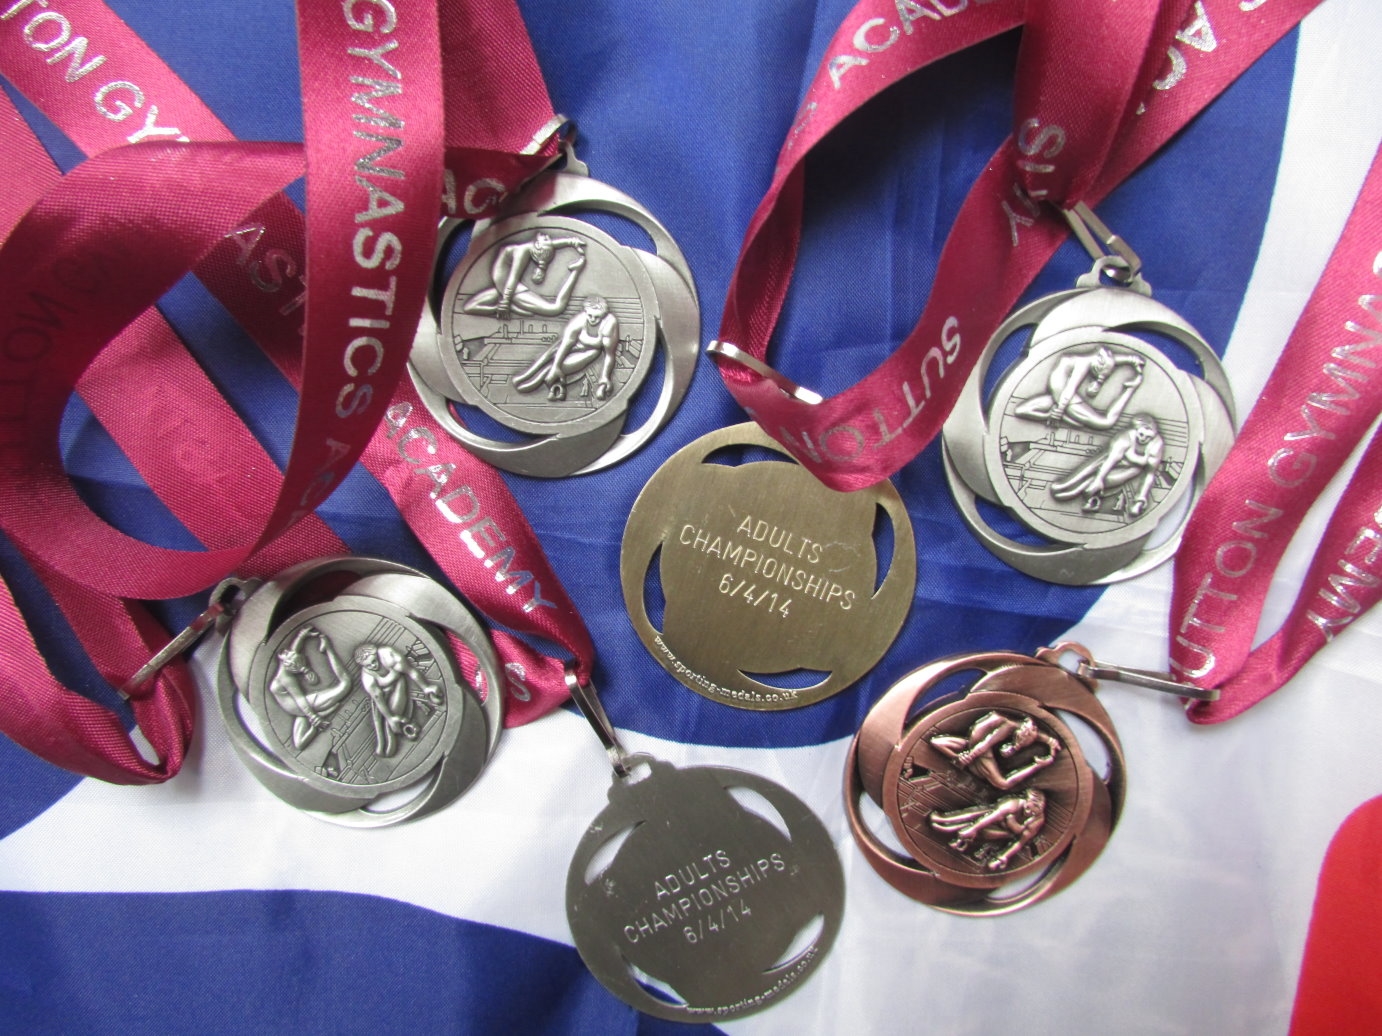 2014 Sutton Gymnastics Academy Championships - London